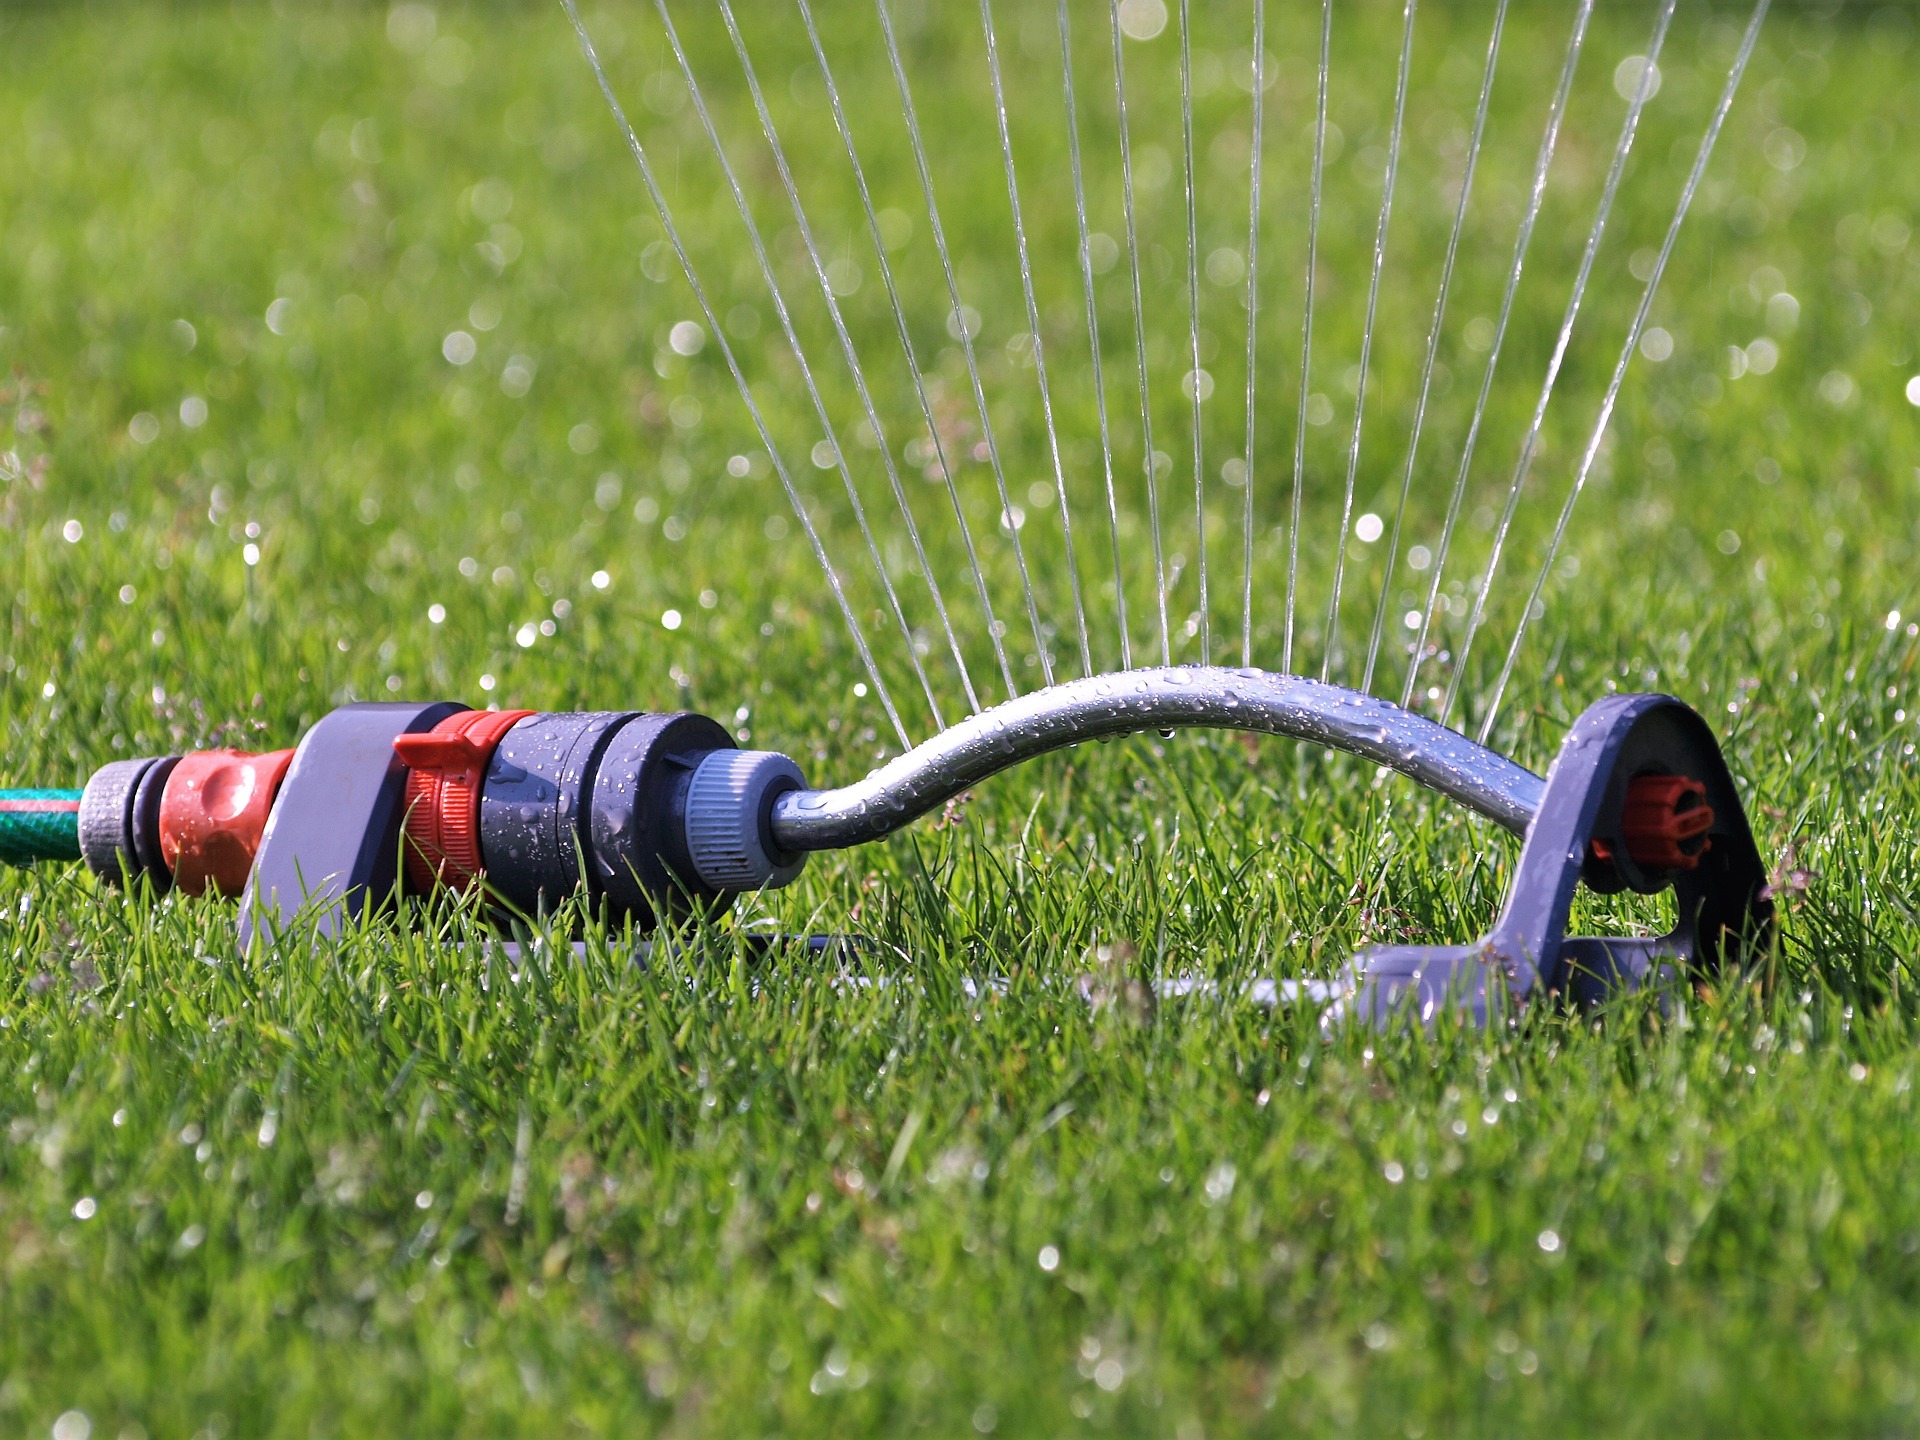 sprinkler watering lawn in backyard